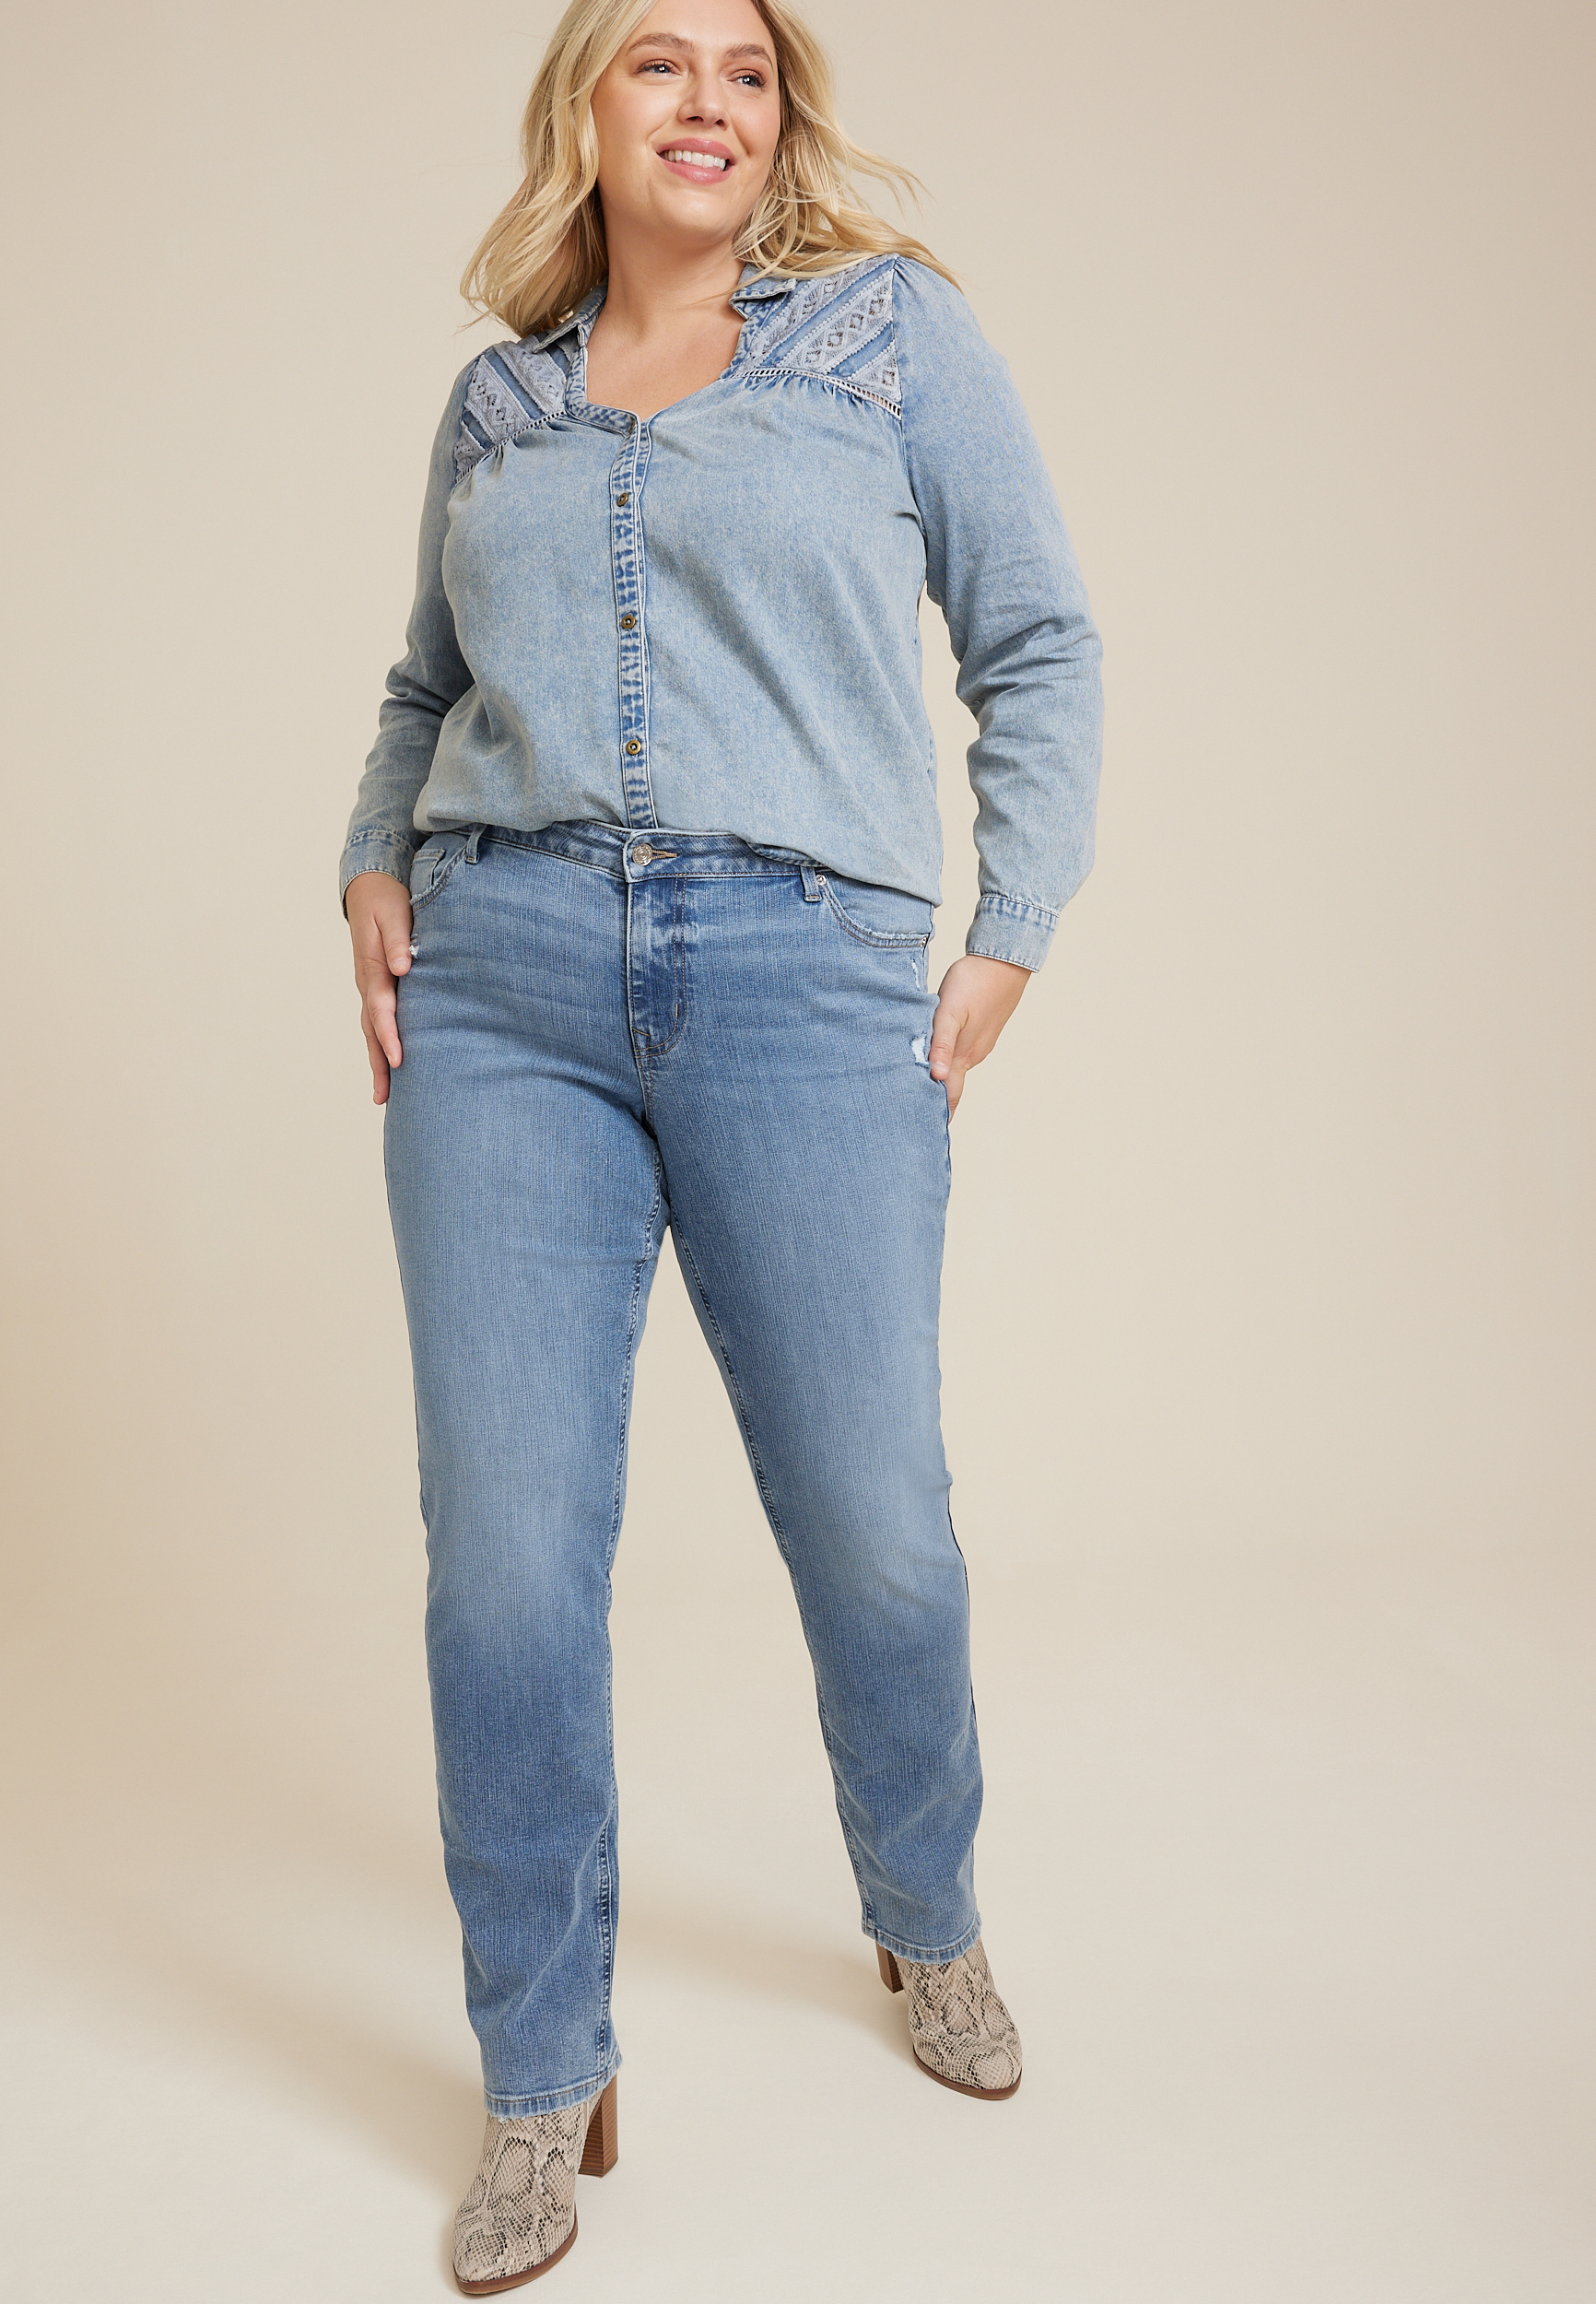 Jms. Womans Jeans size 1818  Women jeans, Women, Jeans size